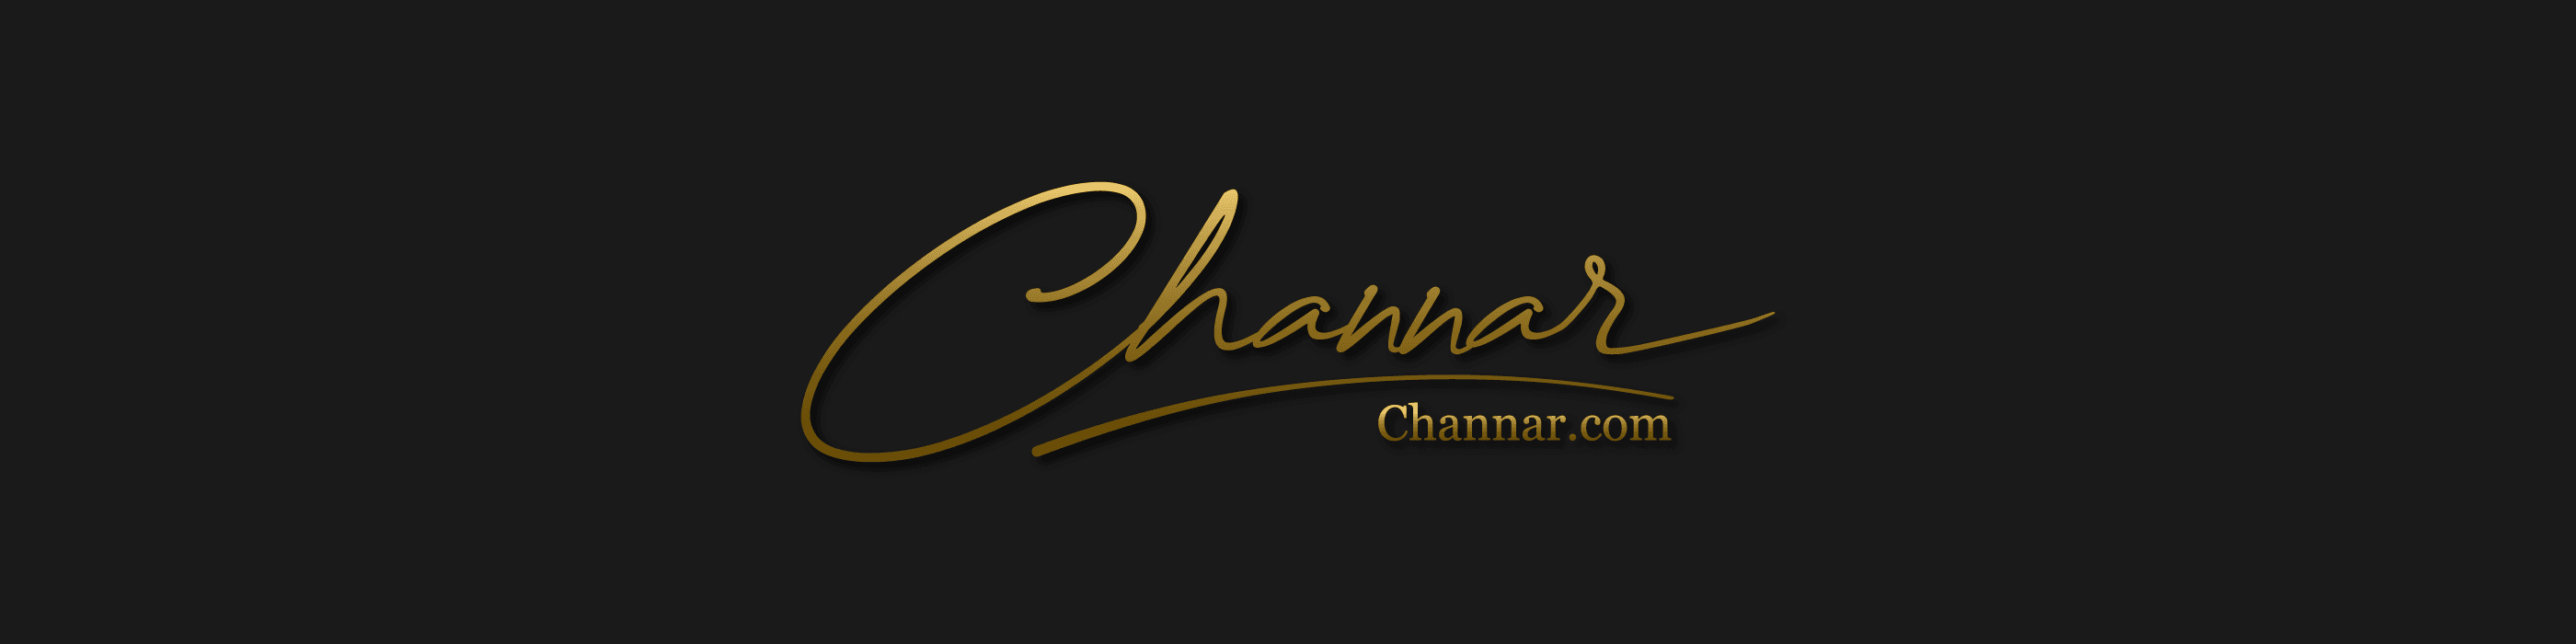 Channar バナー